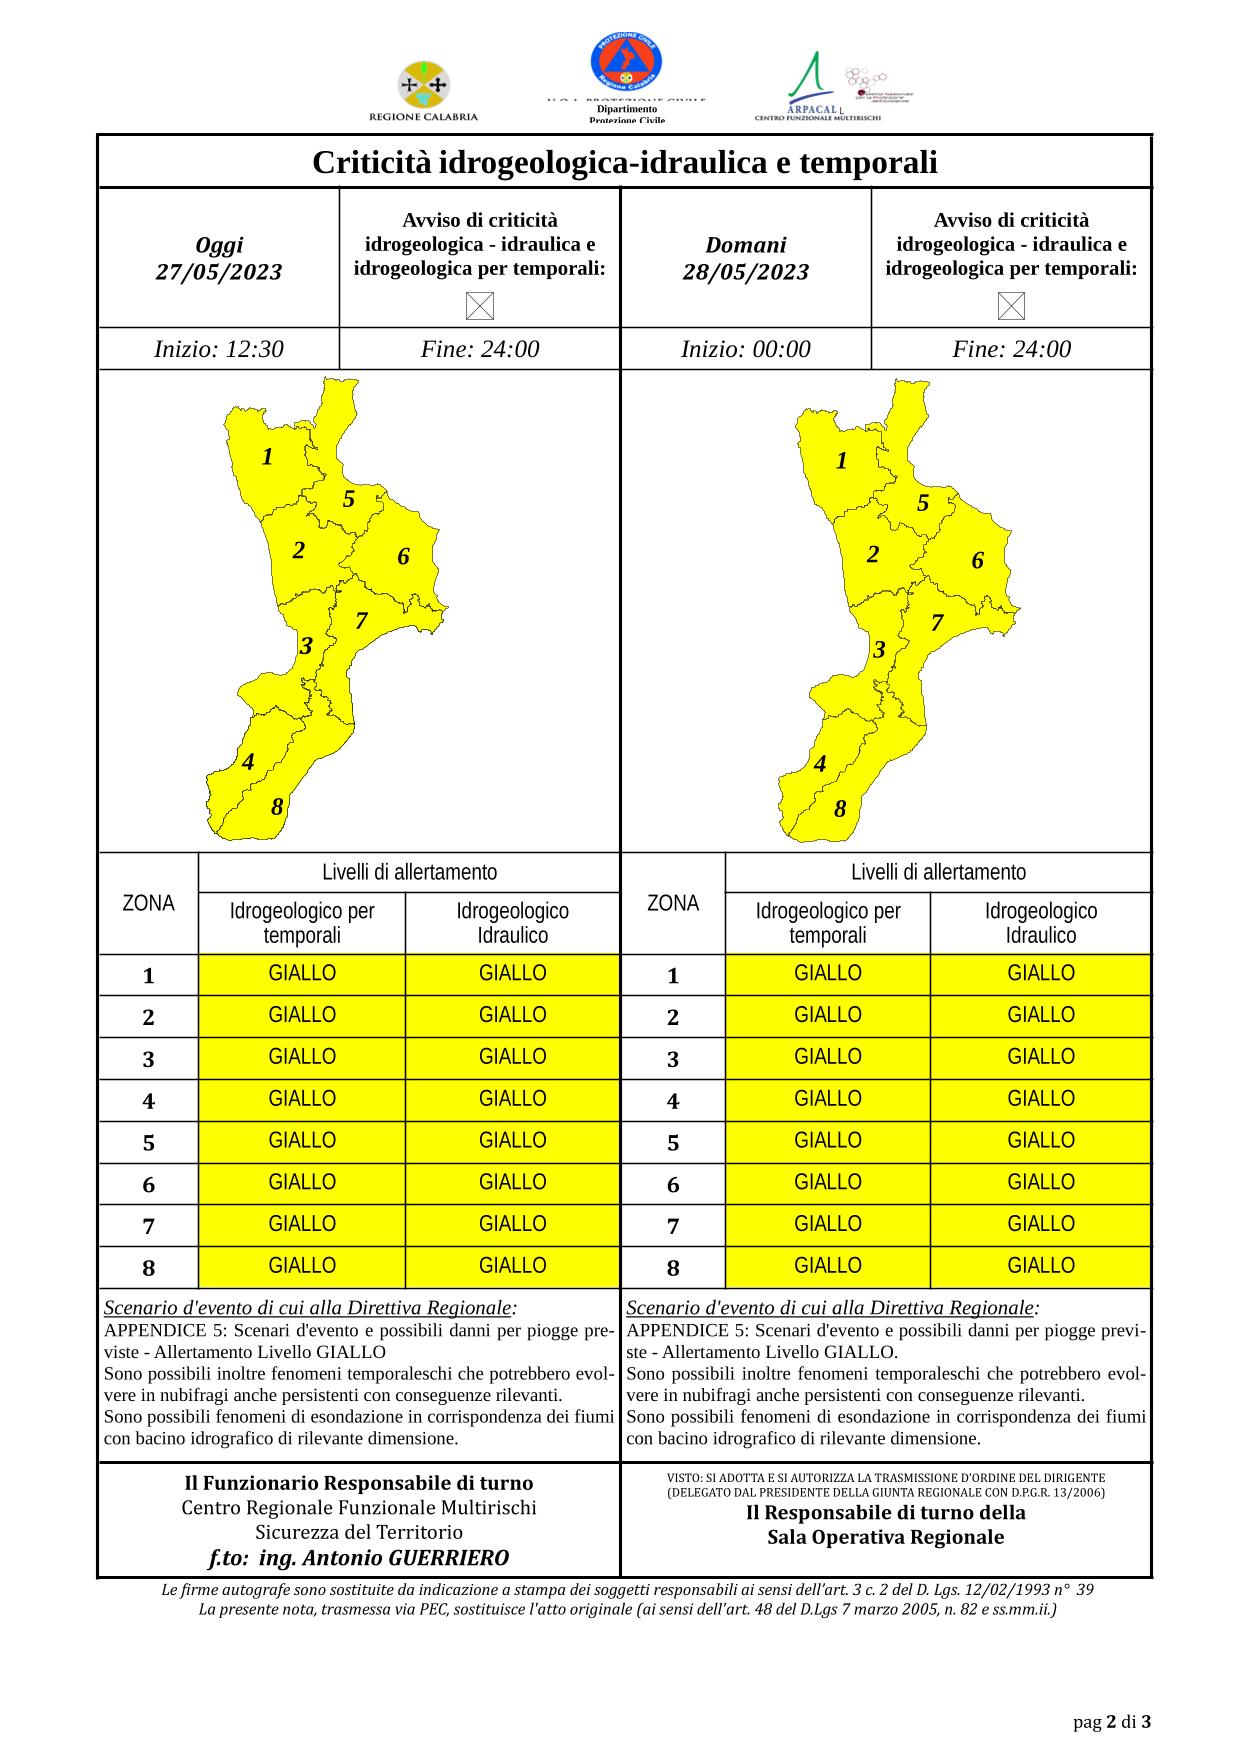 Criticità idrogeologica-idraulica e temporali in Calabria 27-05-2023